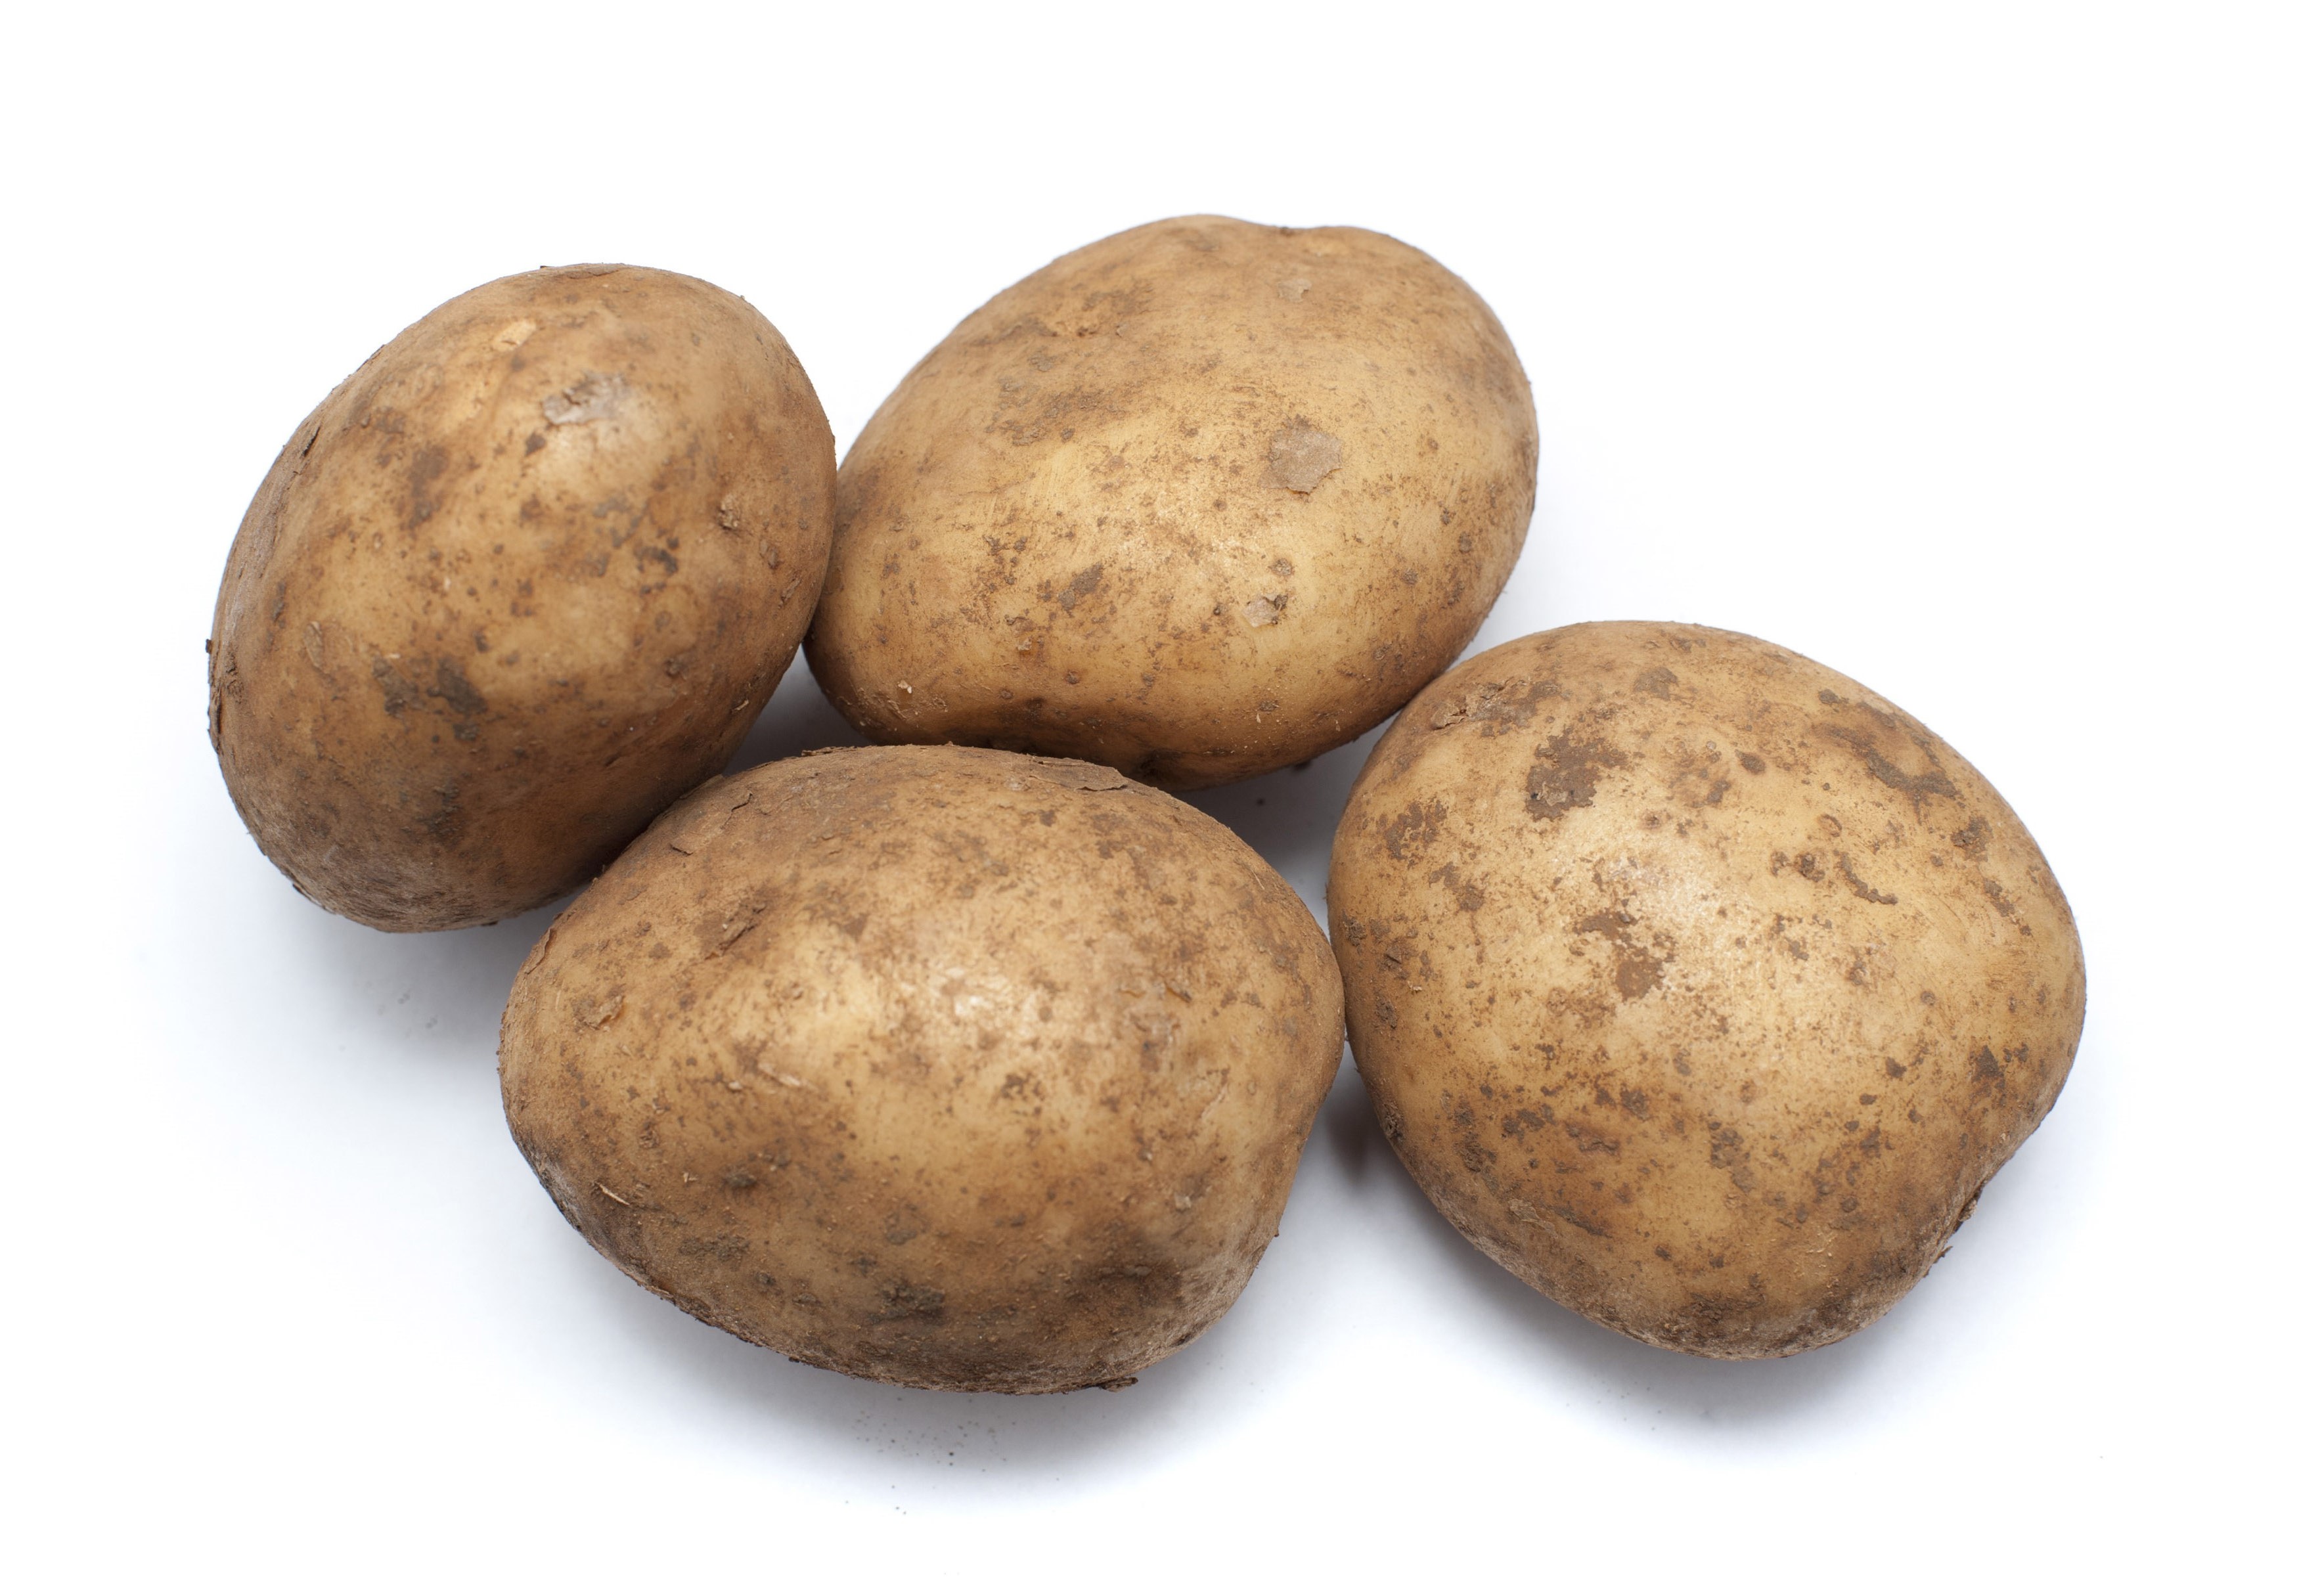 Fresh uncleaned potatoes - Free Stock Image